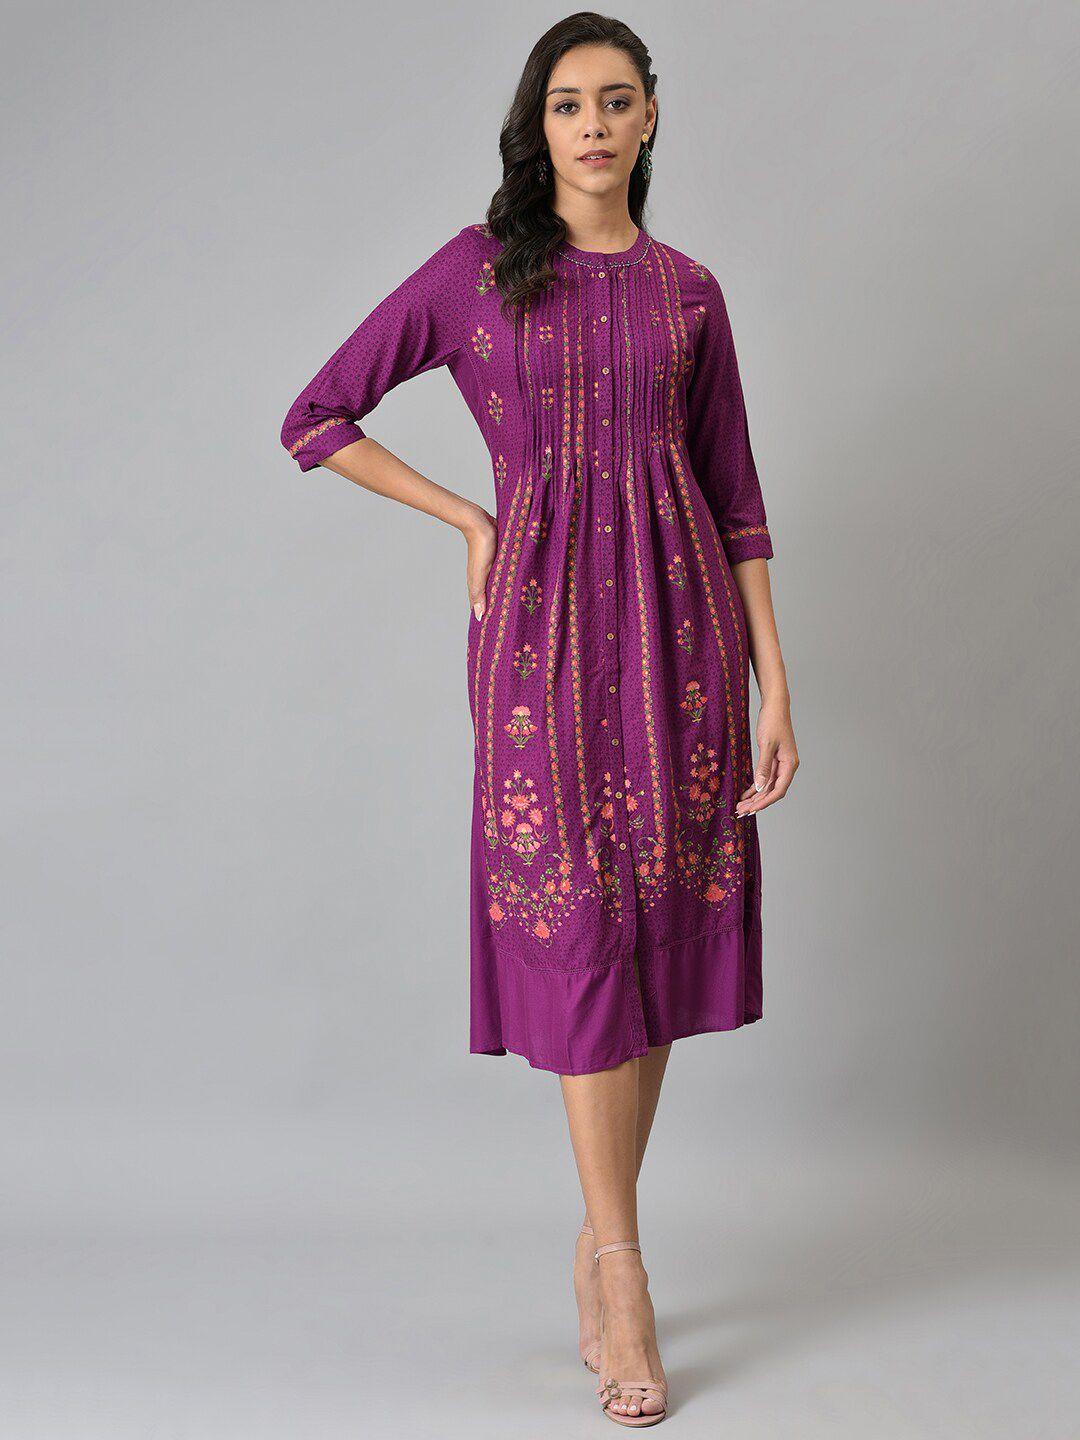 w-purple-ethnic-motifs-chiffon-ethnic-a-line-midi-dress